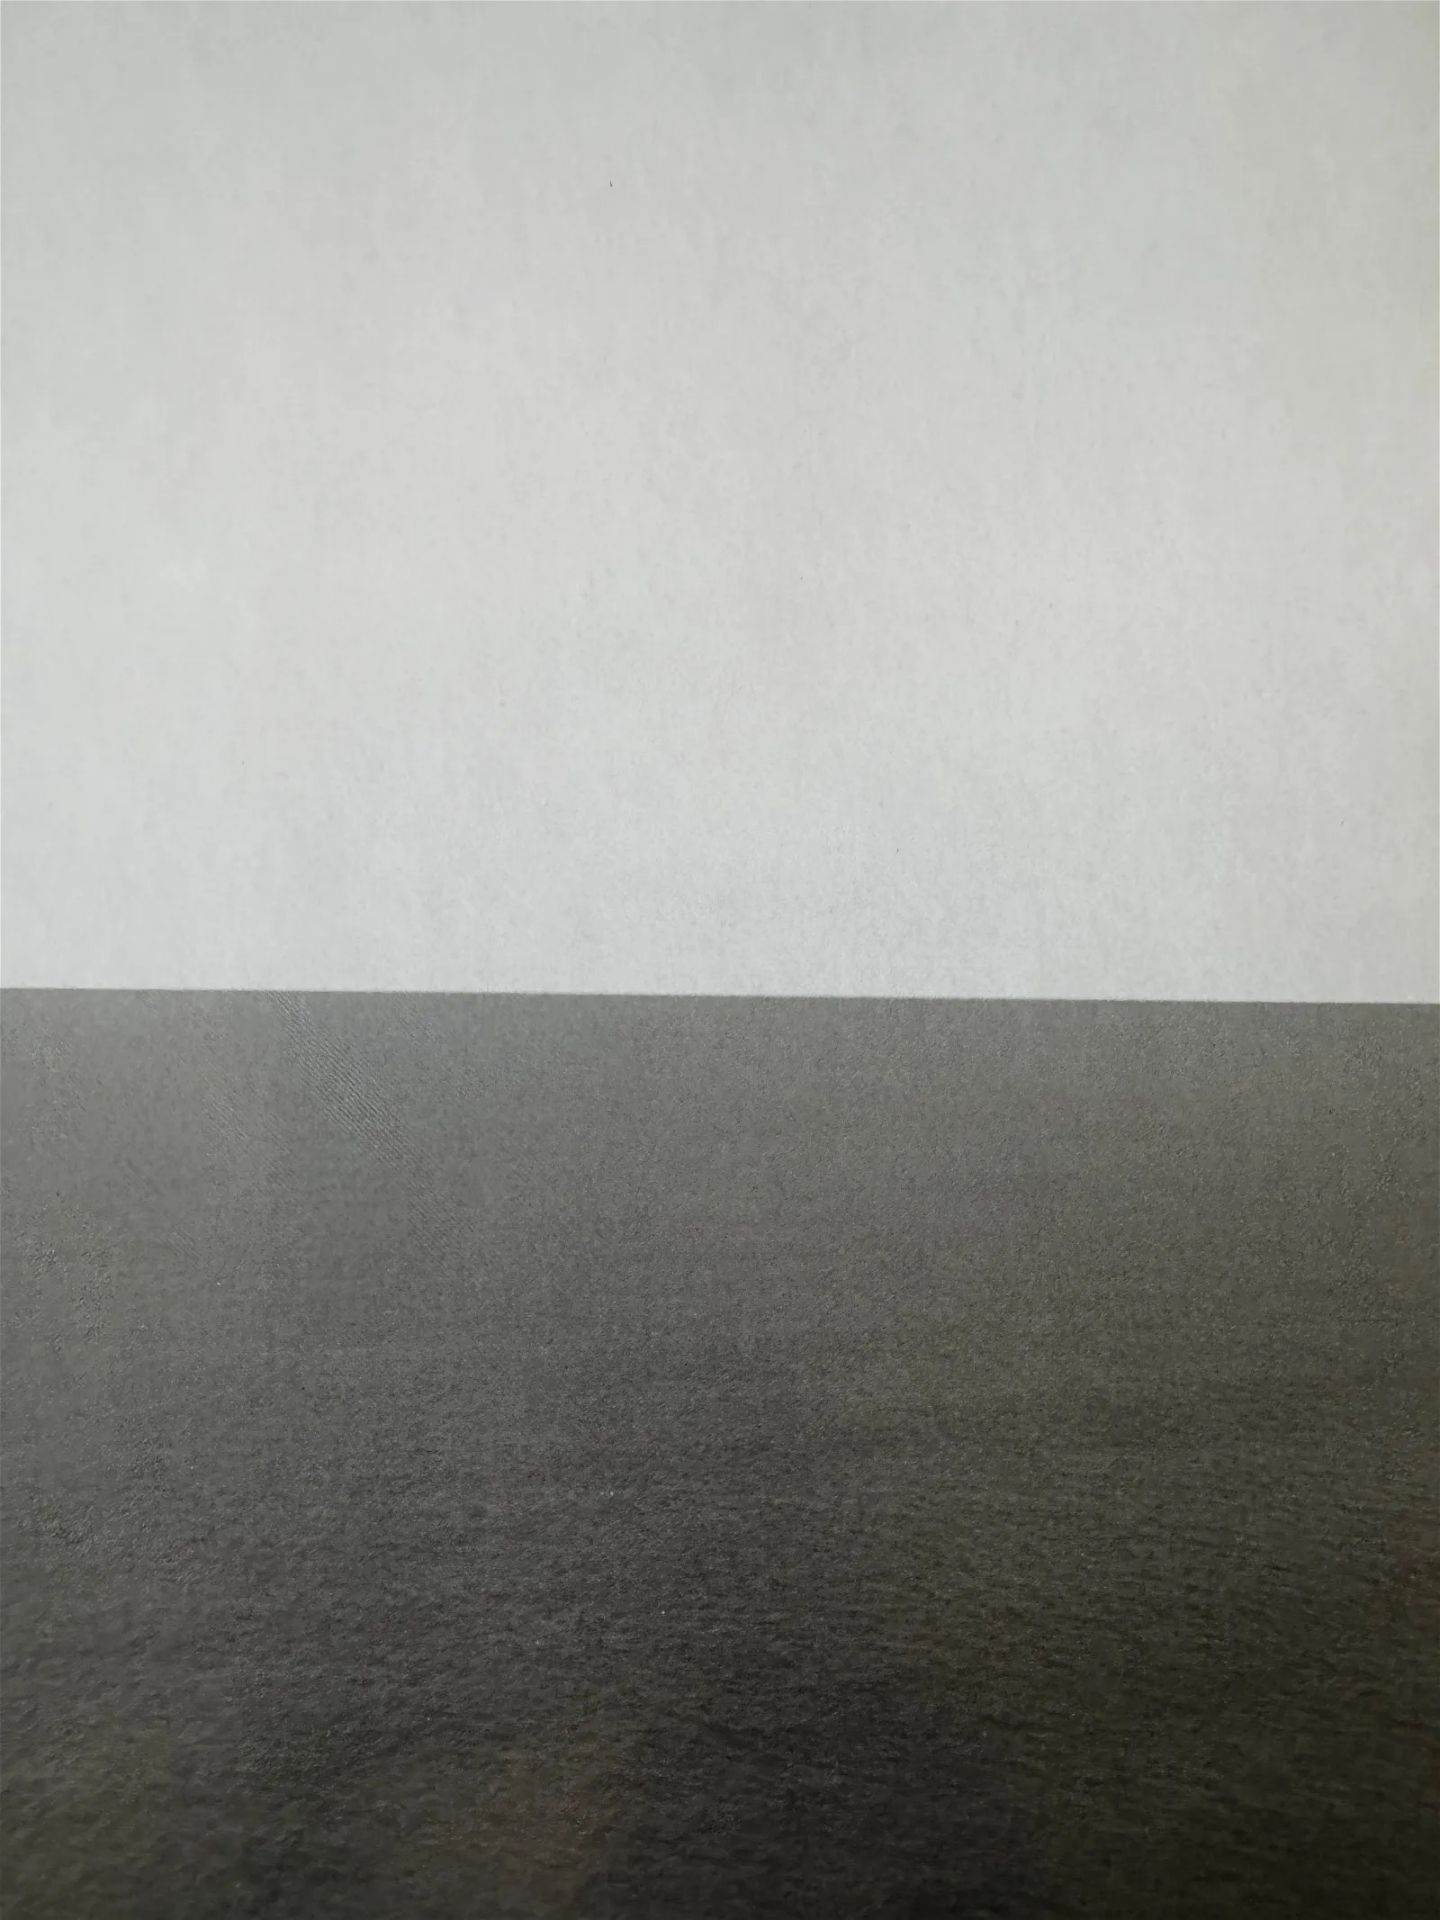 Hiroshi Sugimoto "Yellow Sea, Cheju, 1992" Print - Image 2 of 4